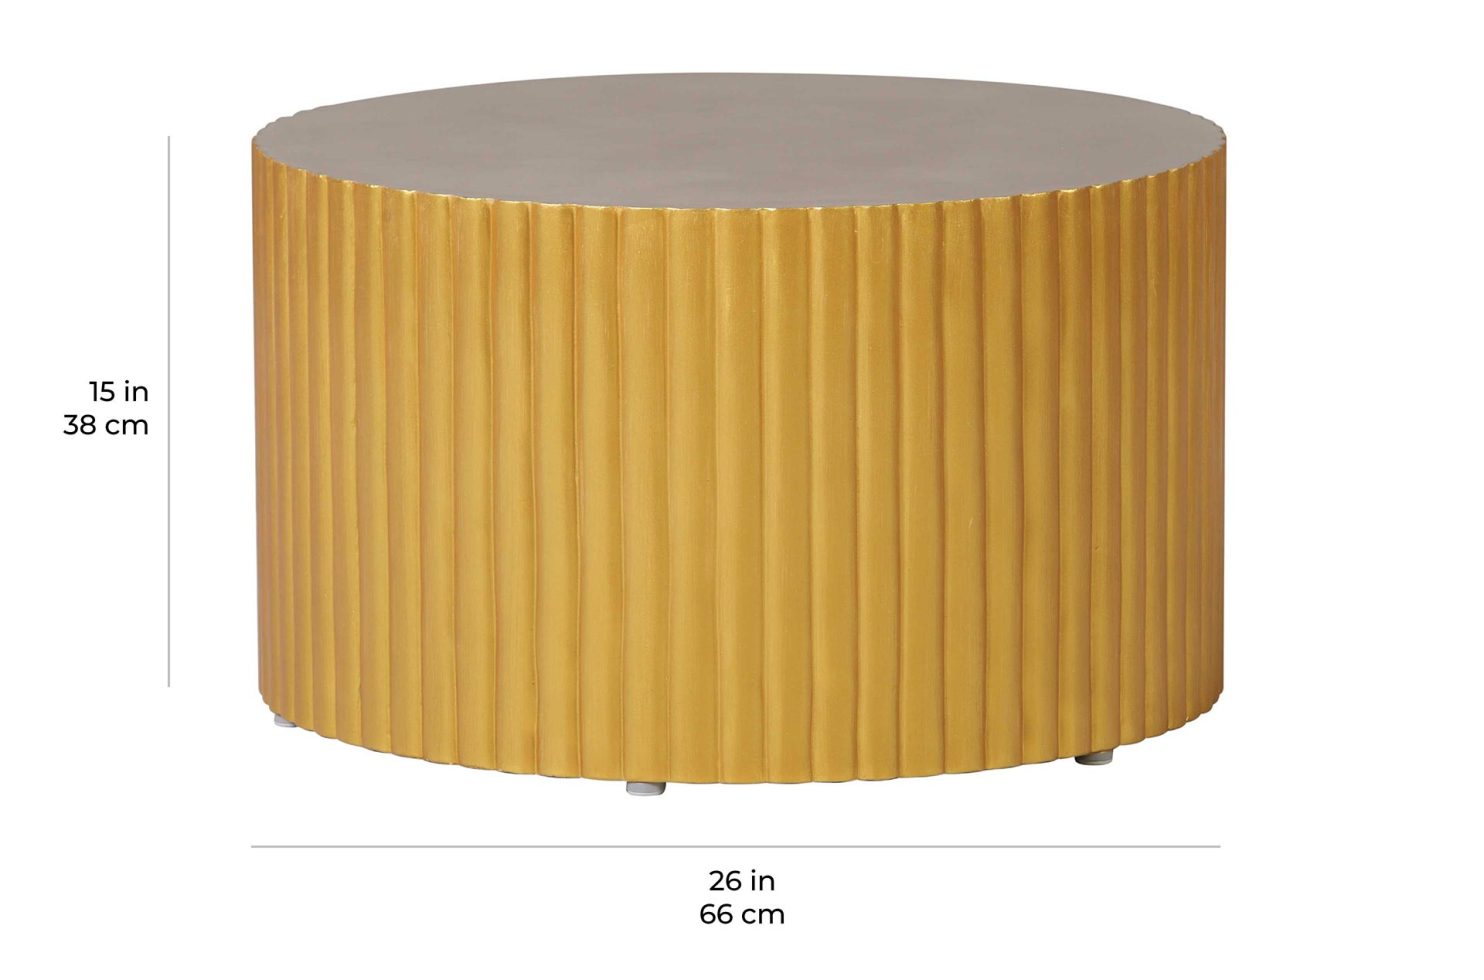 perp joy scallop arabesque coffee table scale dimensions